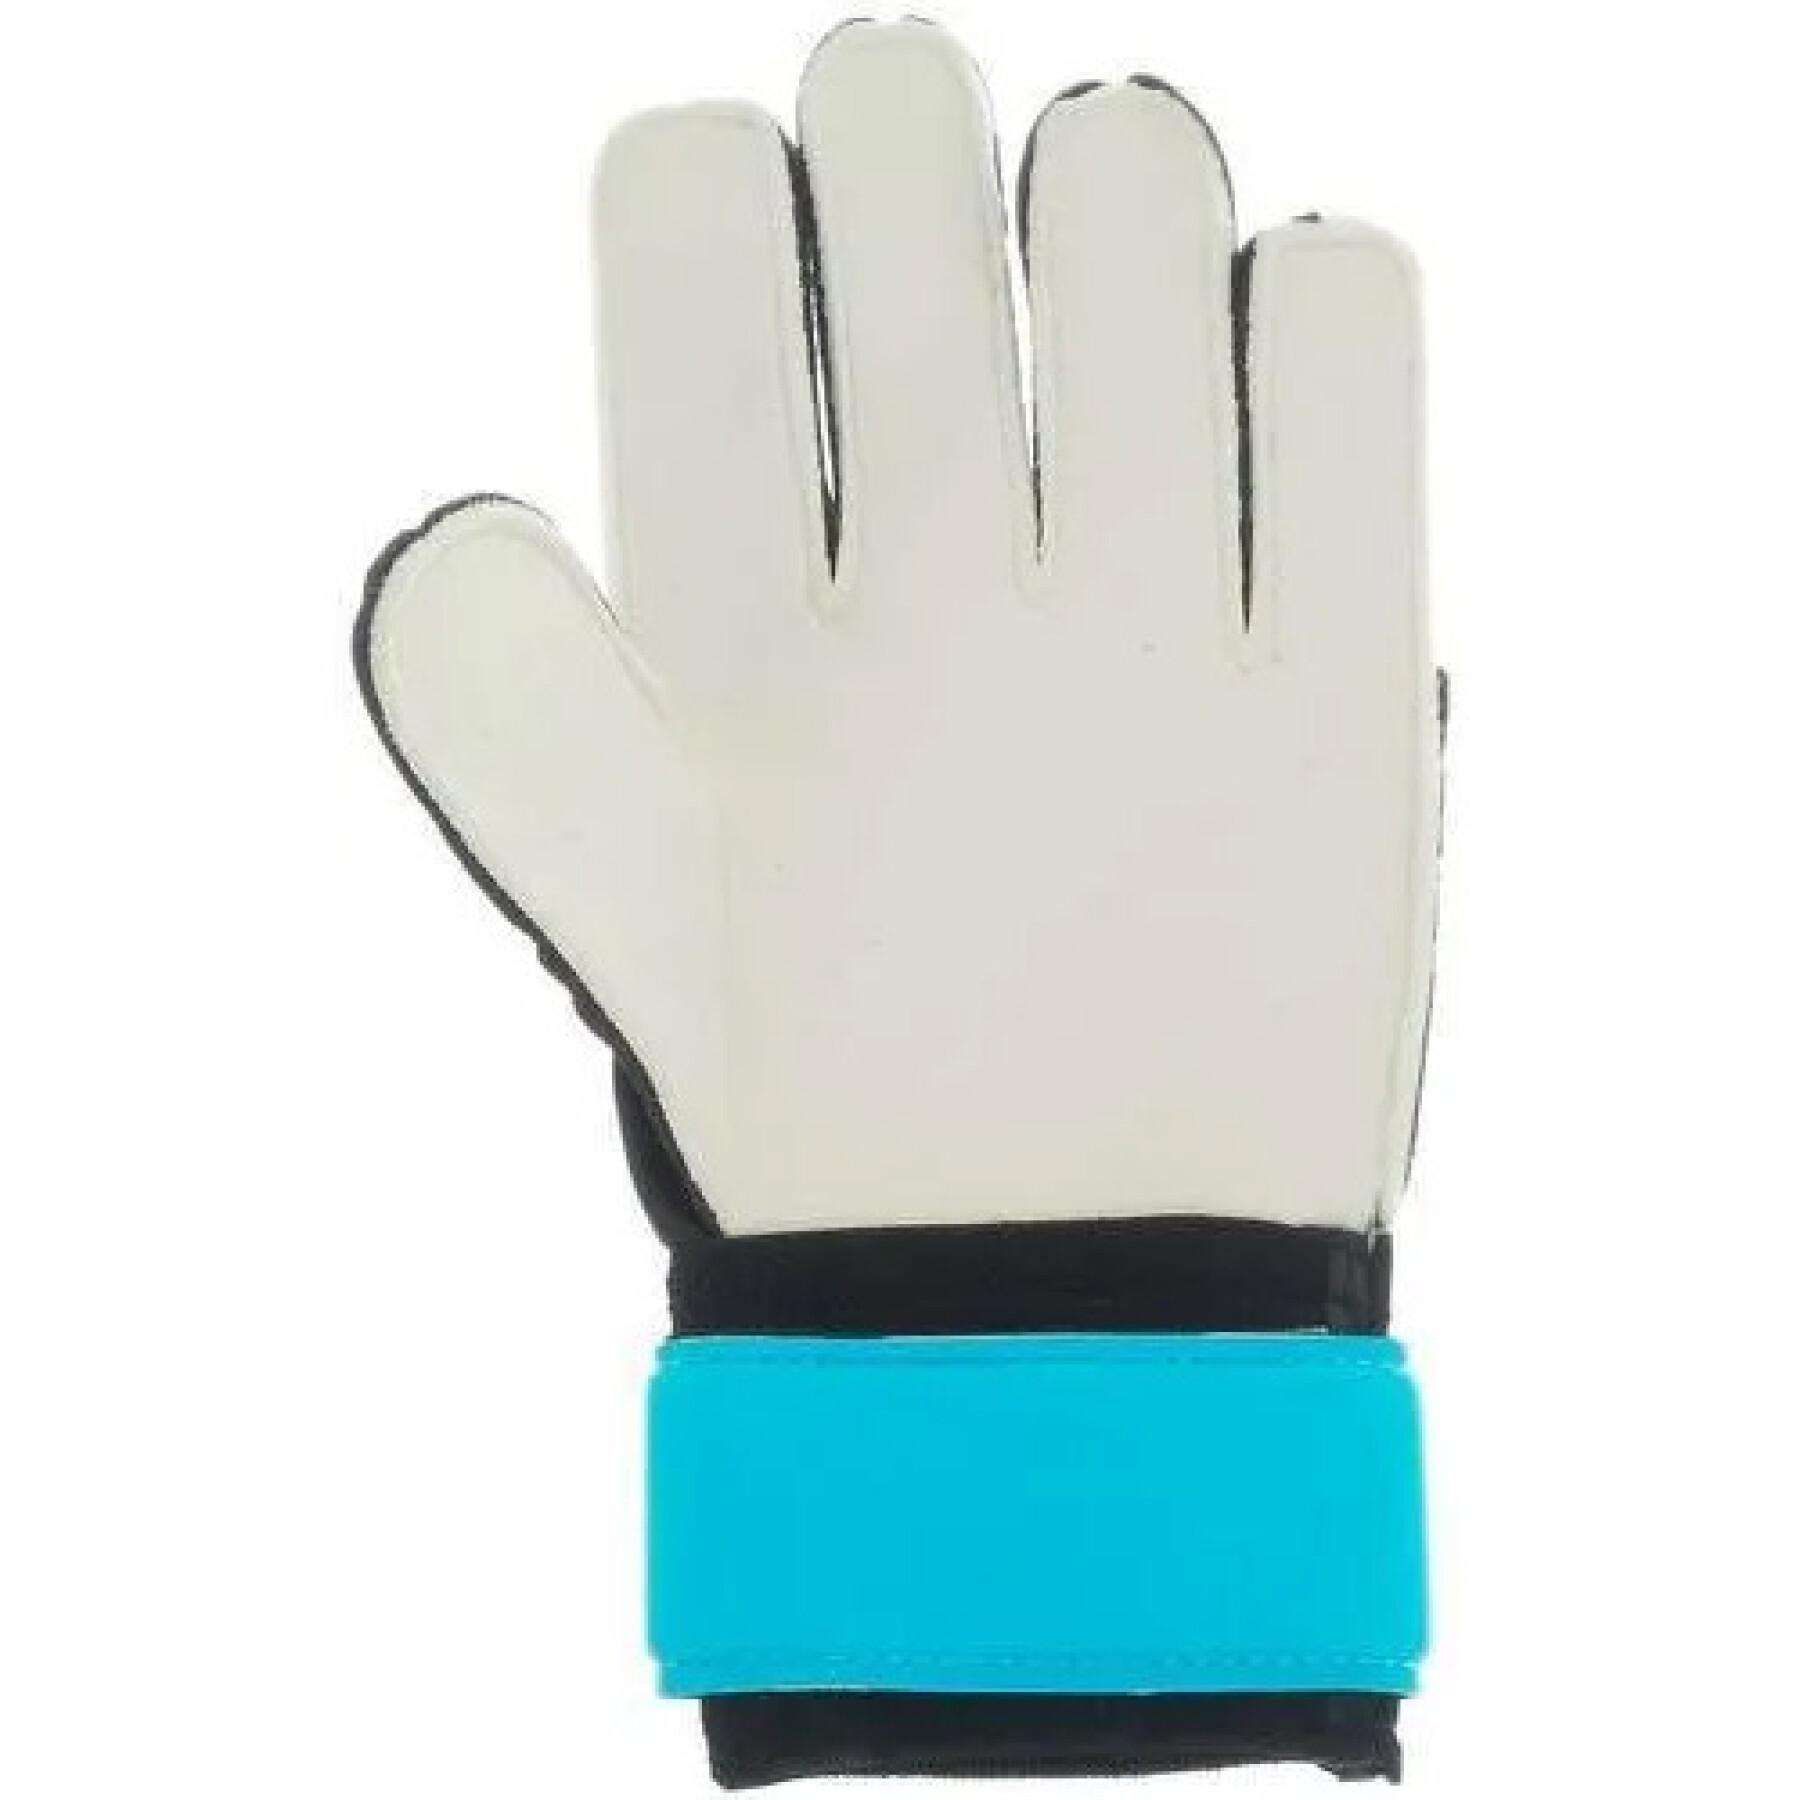 Goalkeeper gloves adidas Predator TRN